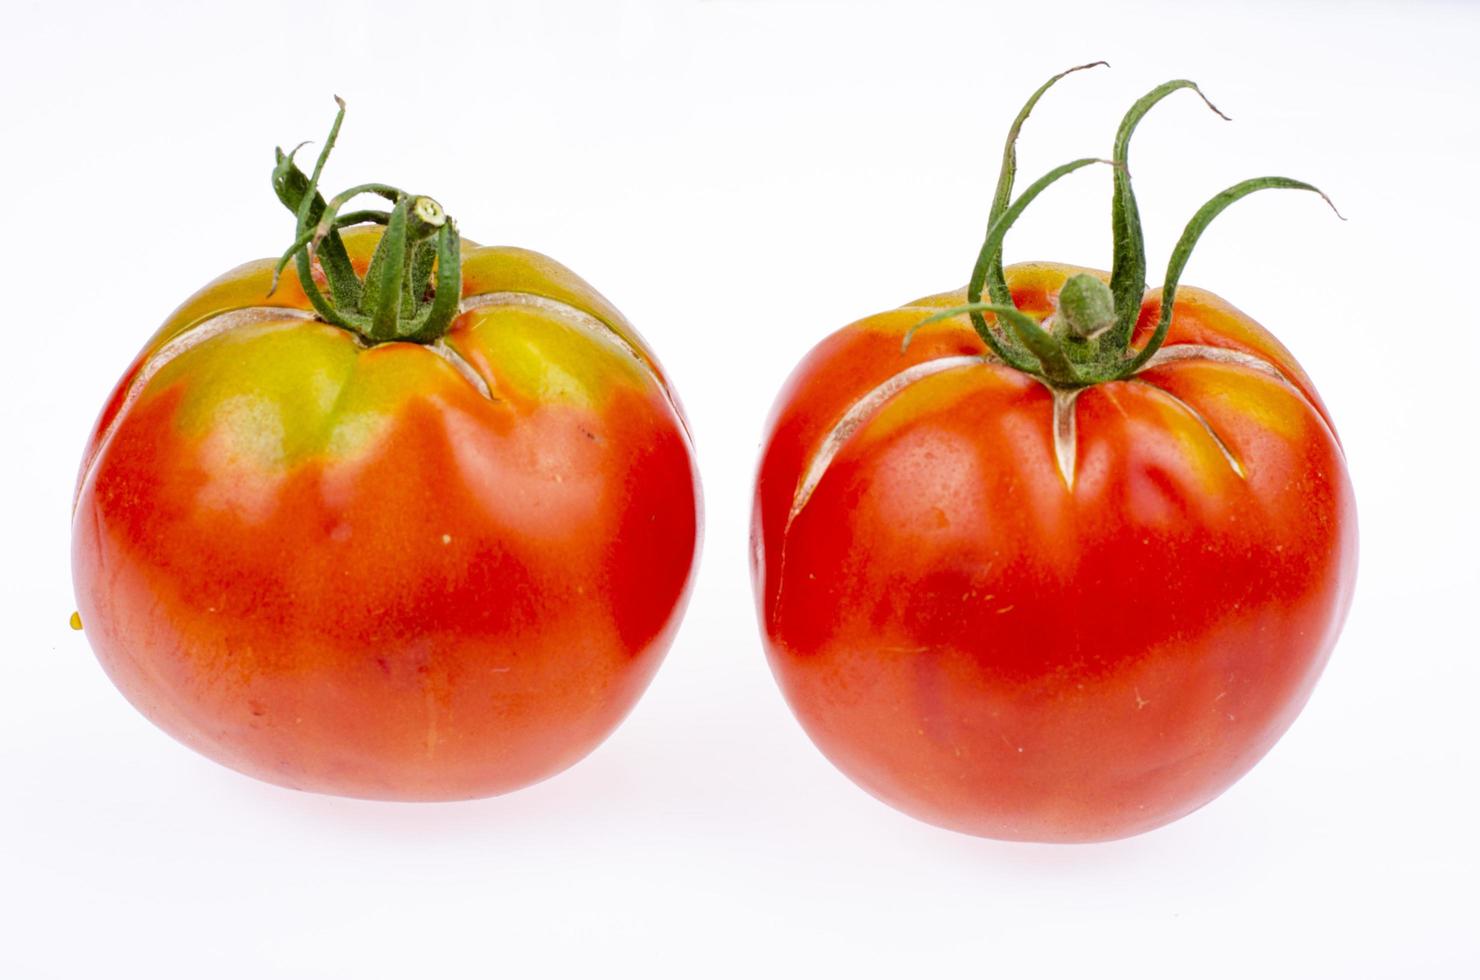 due pomodori rossi maturi con la pelle screpolata. foto in studio.